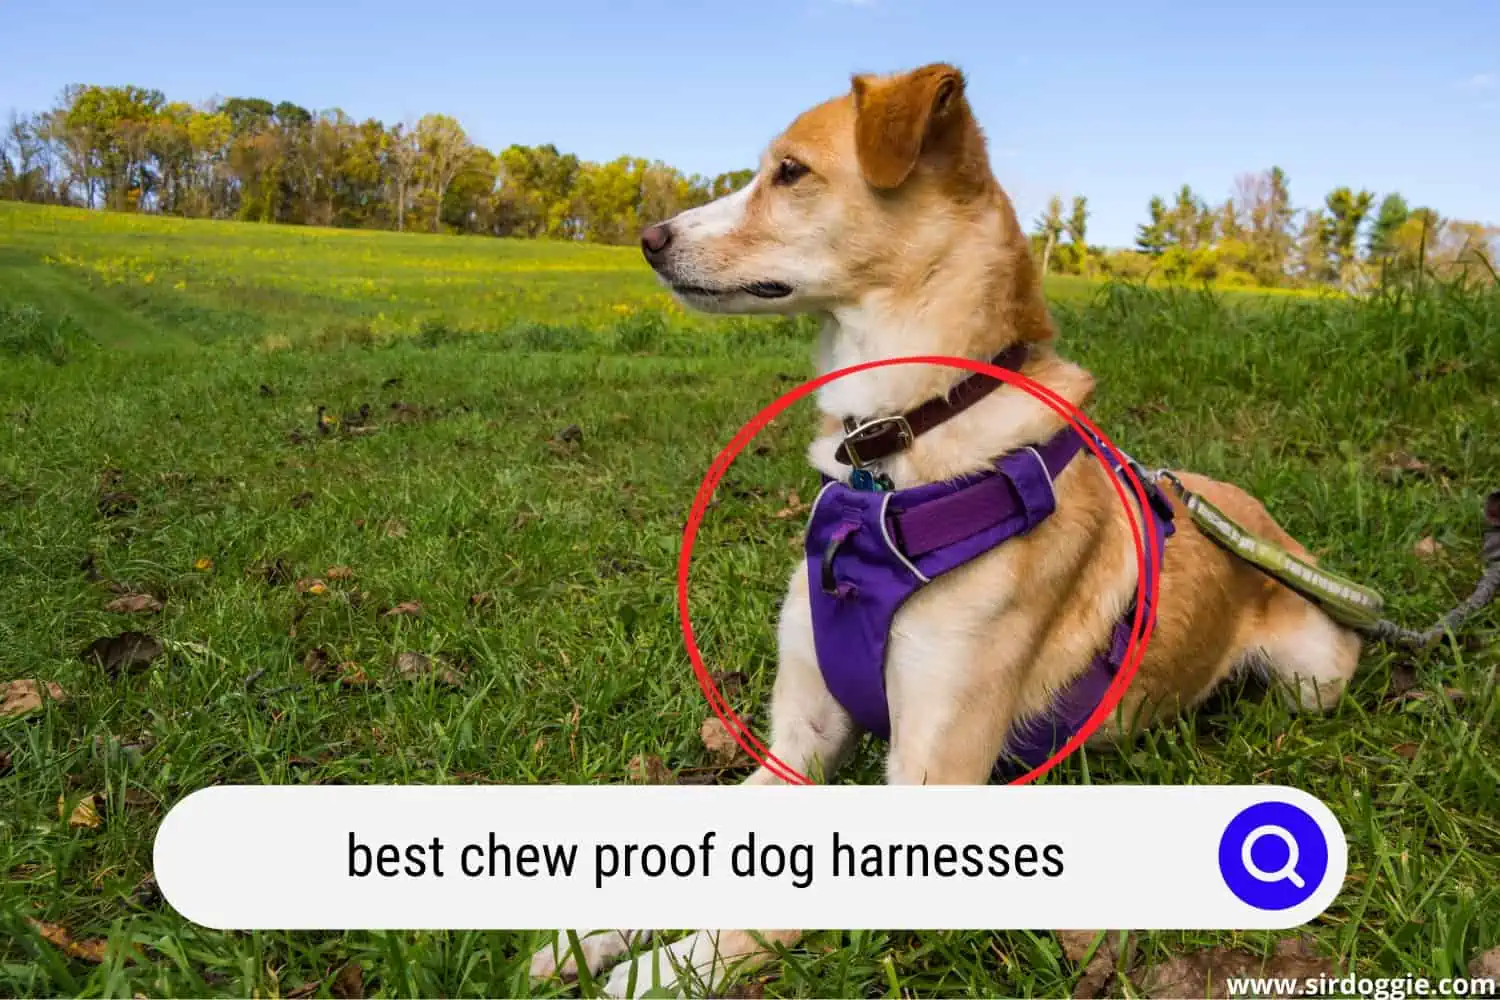 Dog wearing chew proof harness